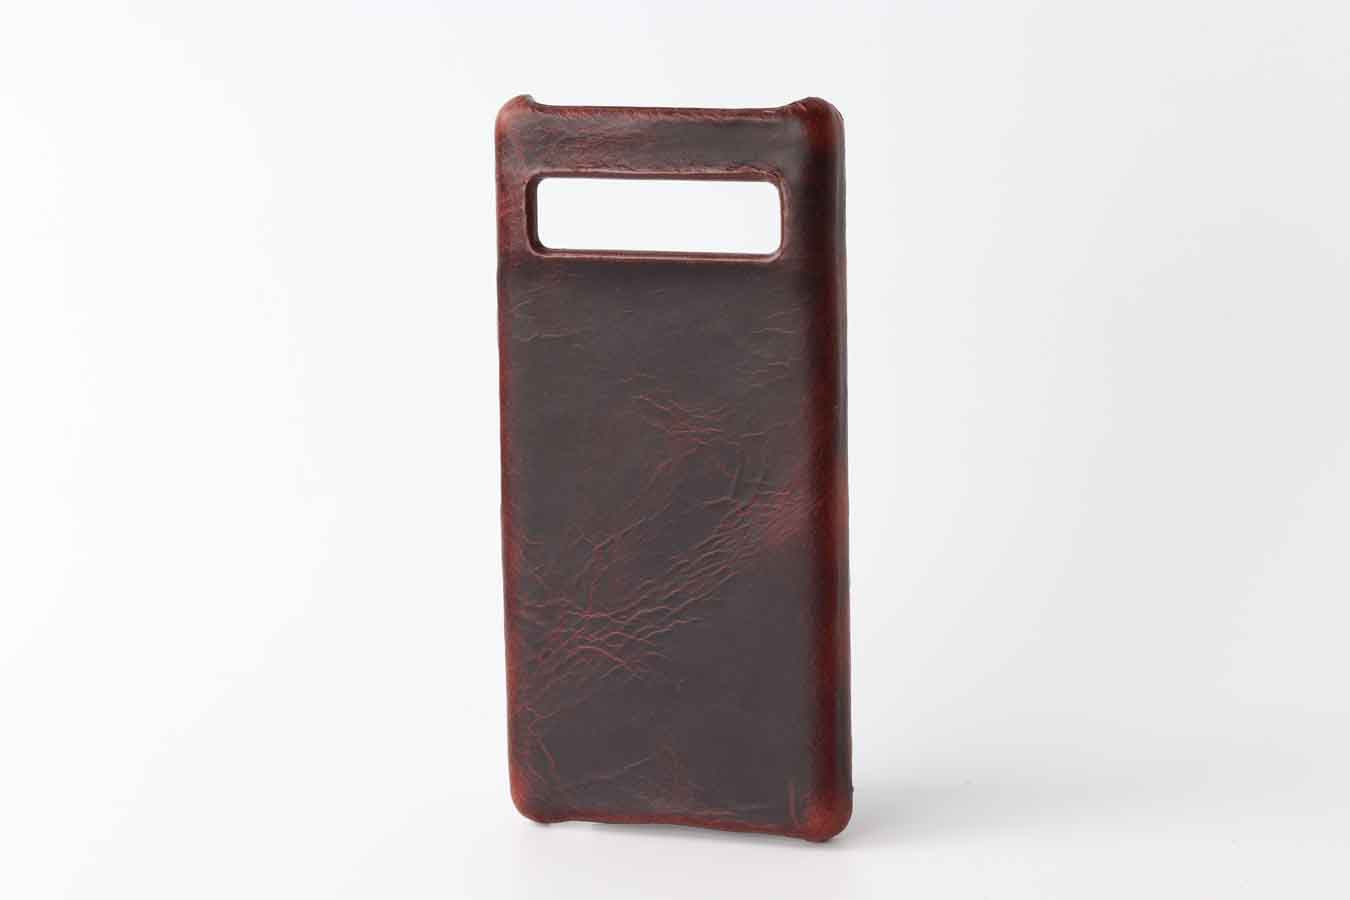 Kaseta chocolate Pixel 7 a, pixel 7 and pixel 7 pro leather case